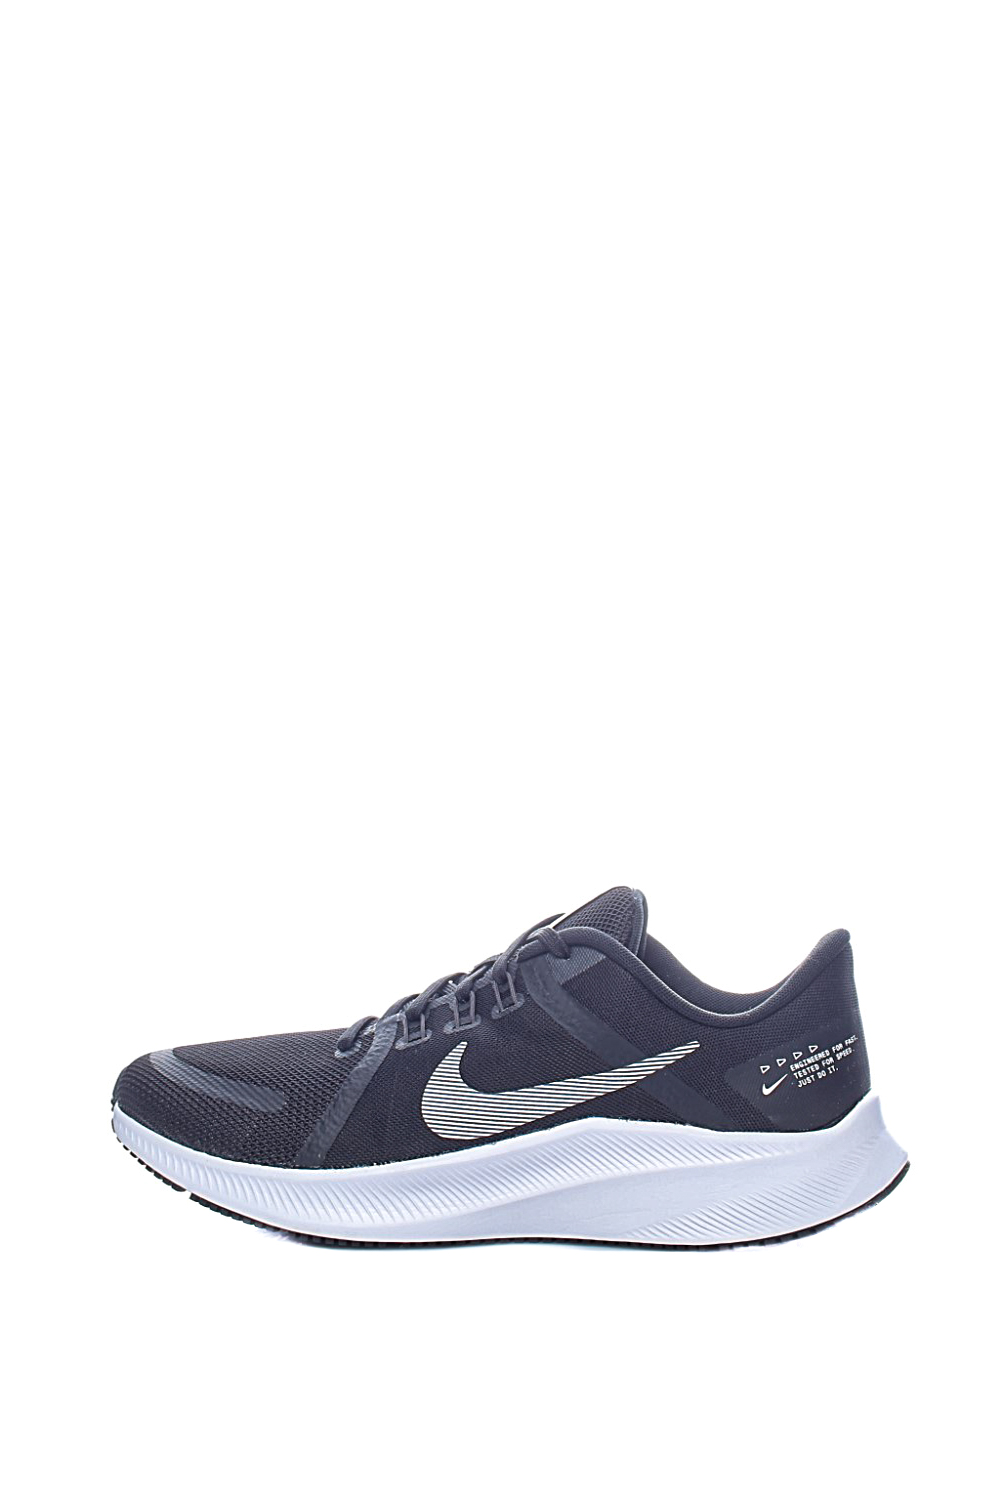 NIKE - Ανδρικά running παπούτσια NIKE QUEST 4 μαύρα Ανδρικά/Παπούτσια/Αθλητικά/Running